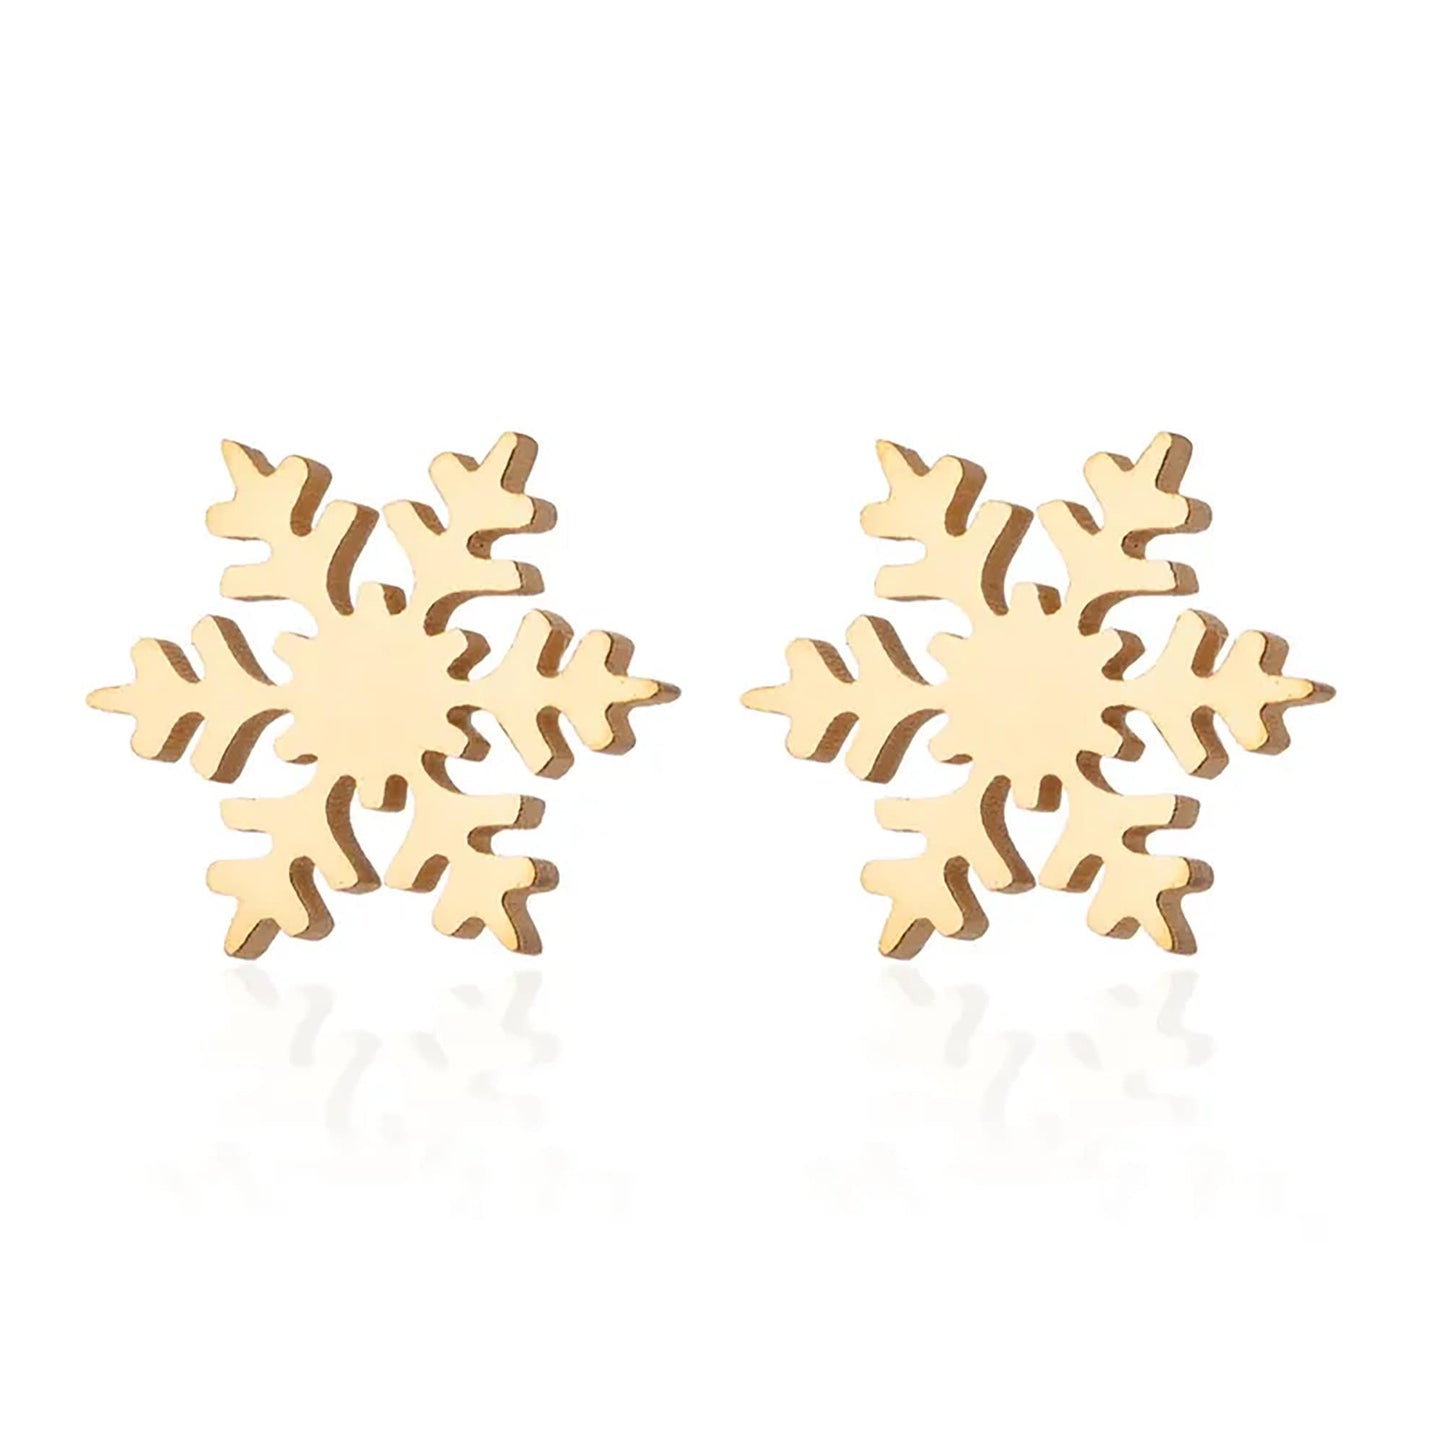 Titanium Snowflakes Stud Earrings, Non Tarnish Earrings, Implant Grade Titanium Waterproof Earrings, Vintage Style Earrings, Minimal